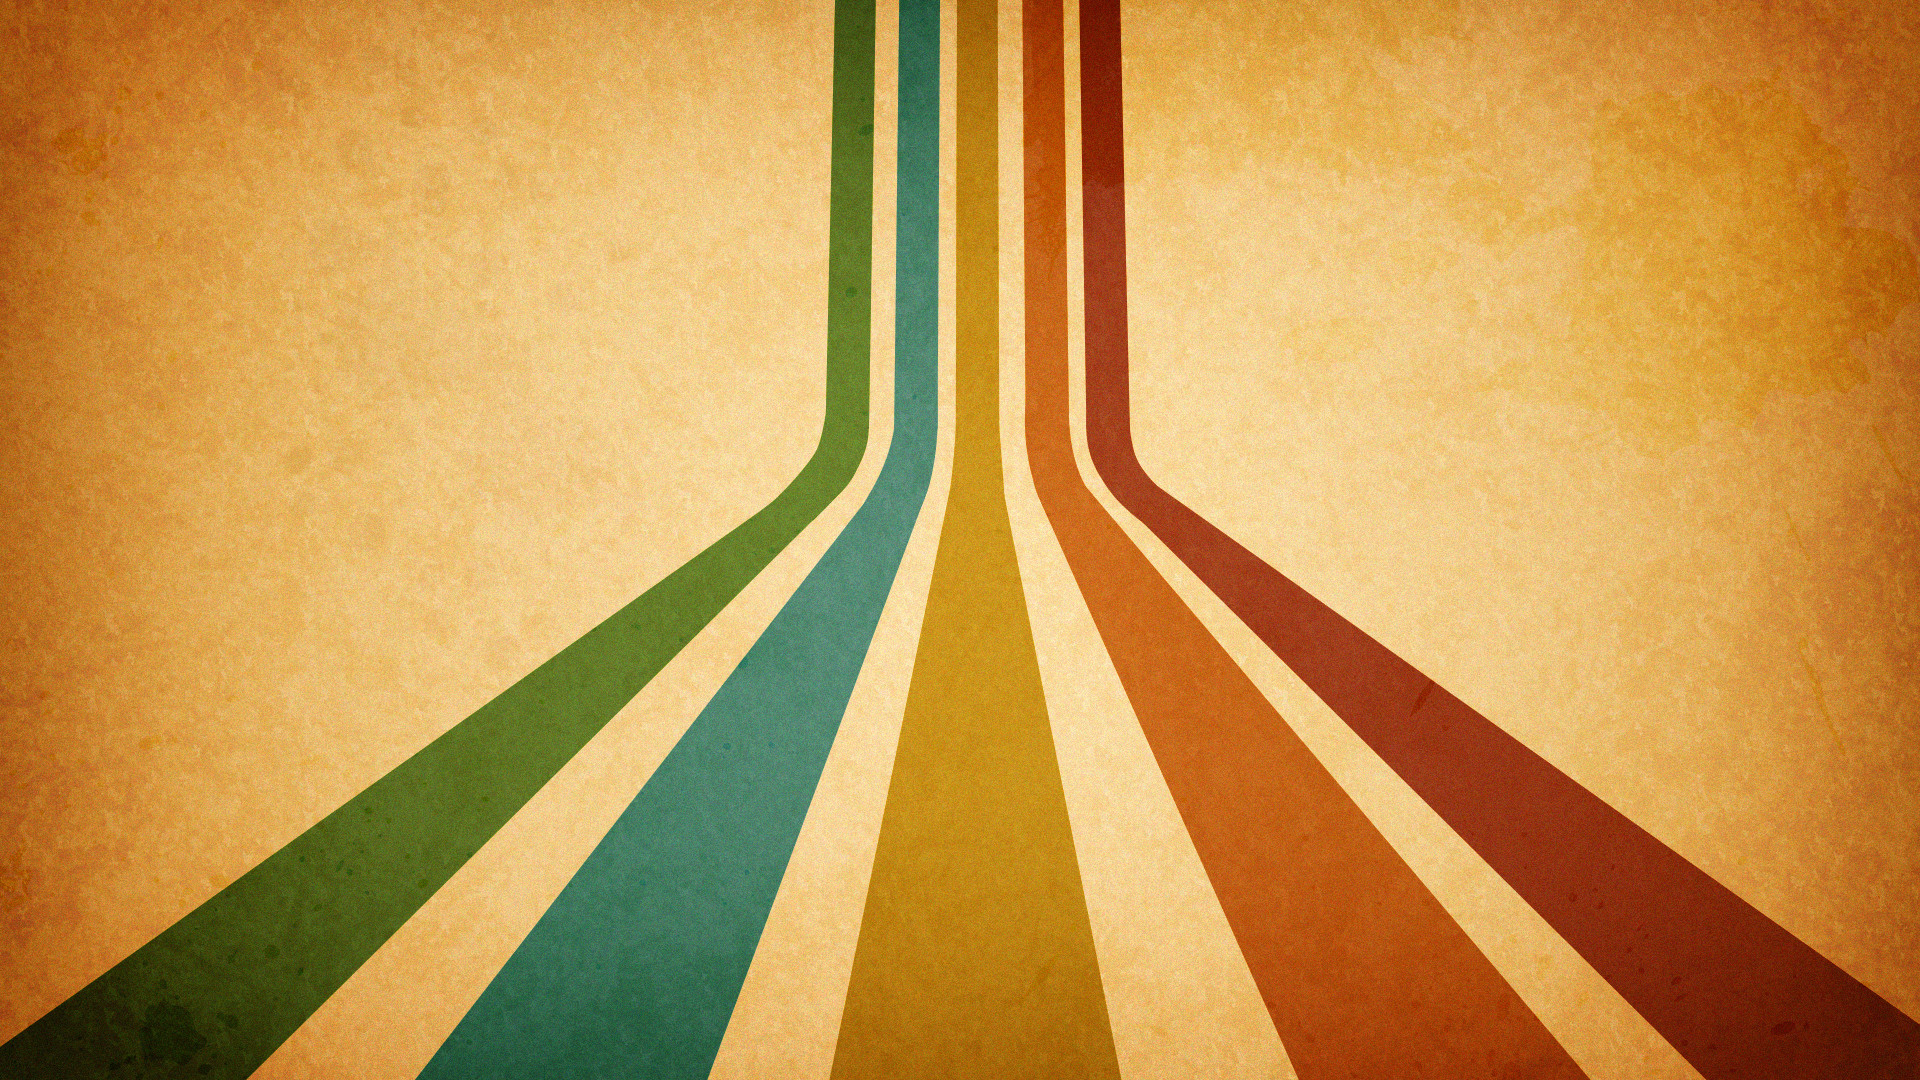 retro desktop wallpaper,green,yellow,orange,line,pattern